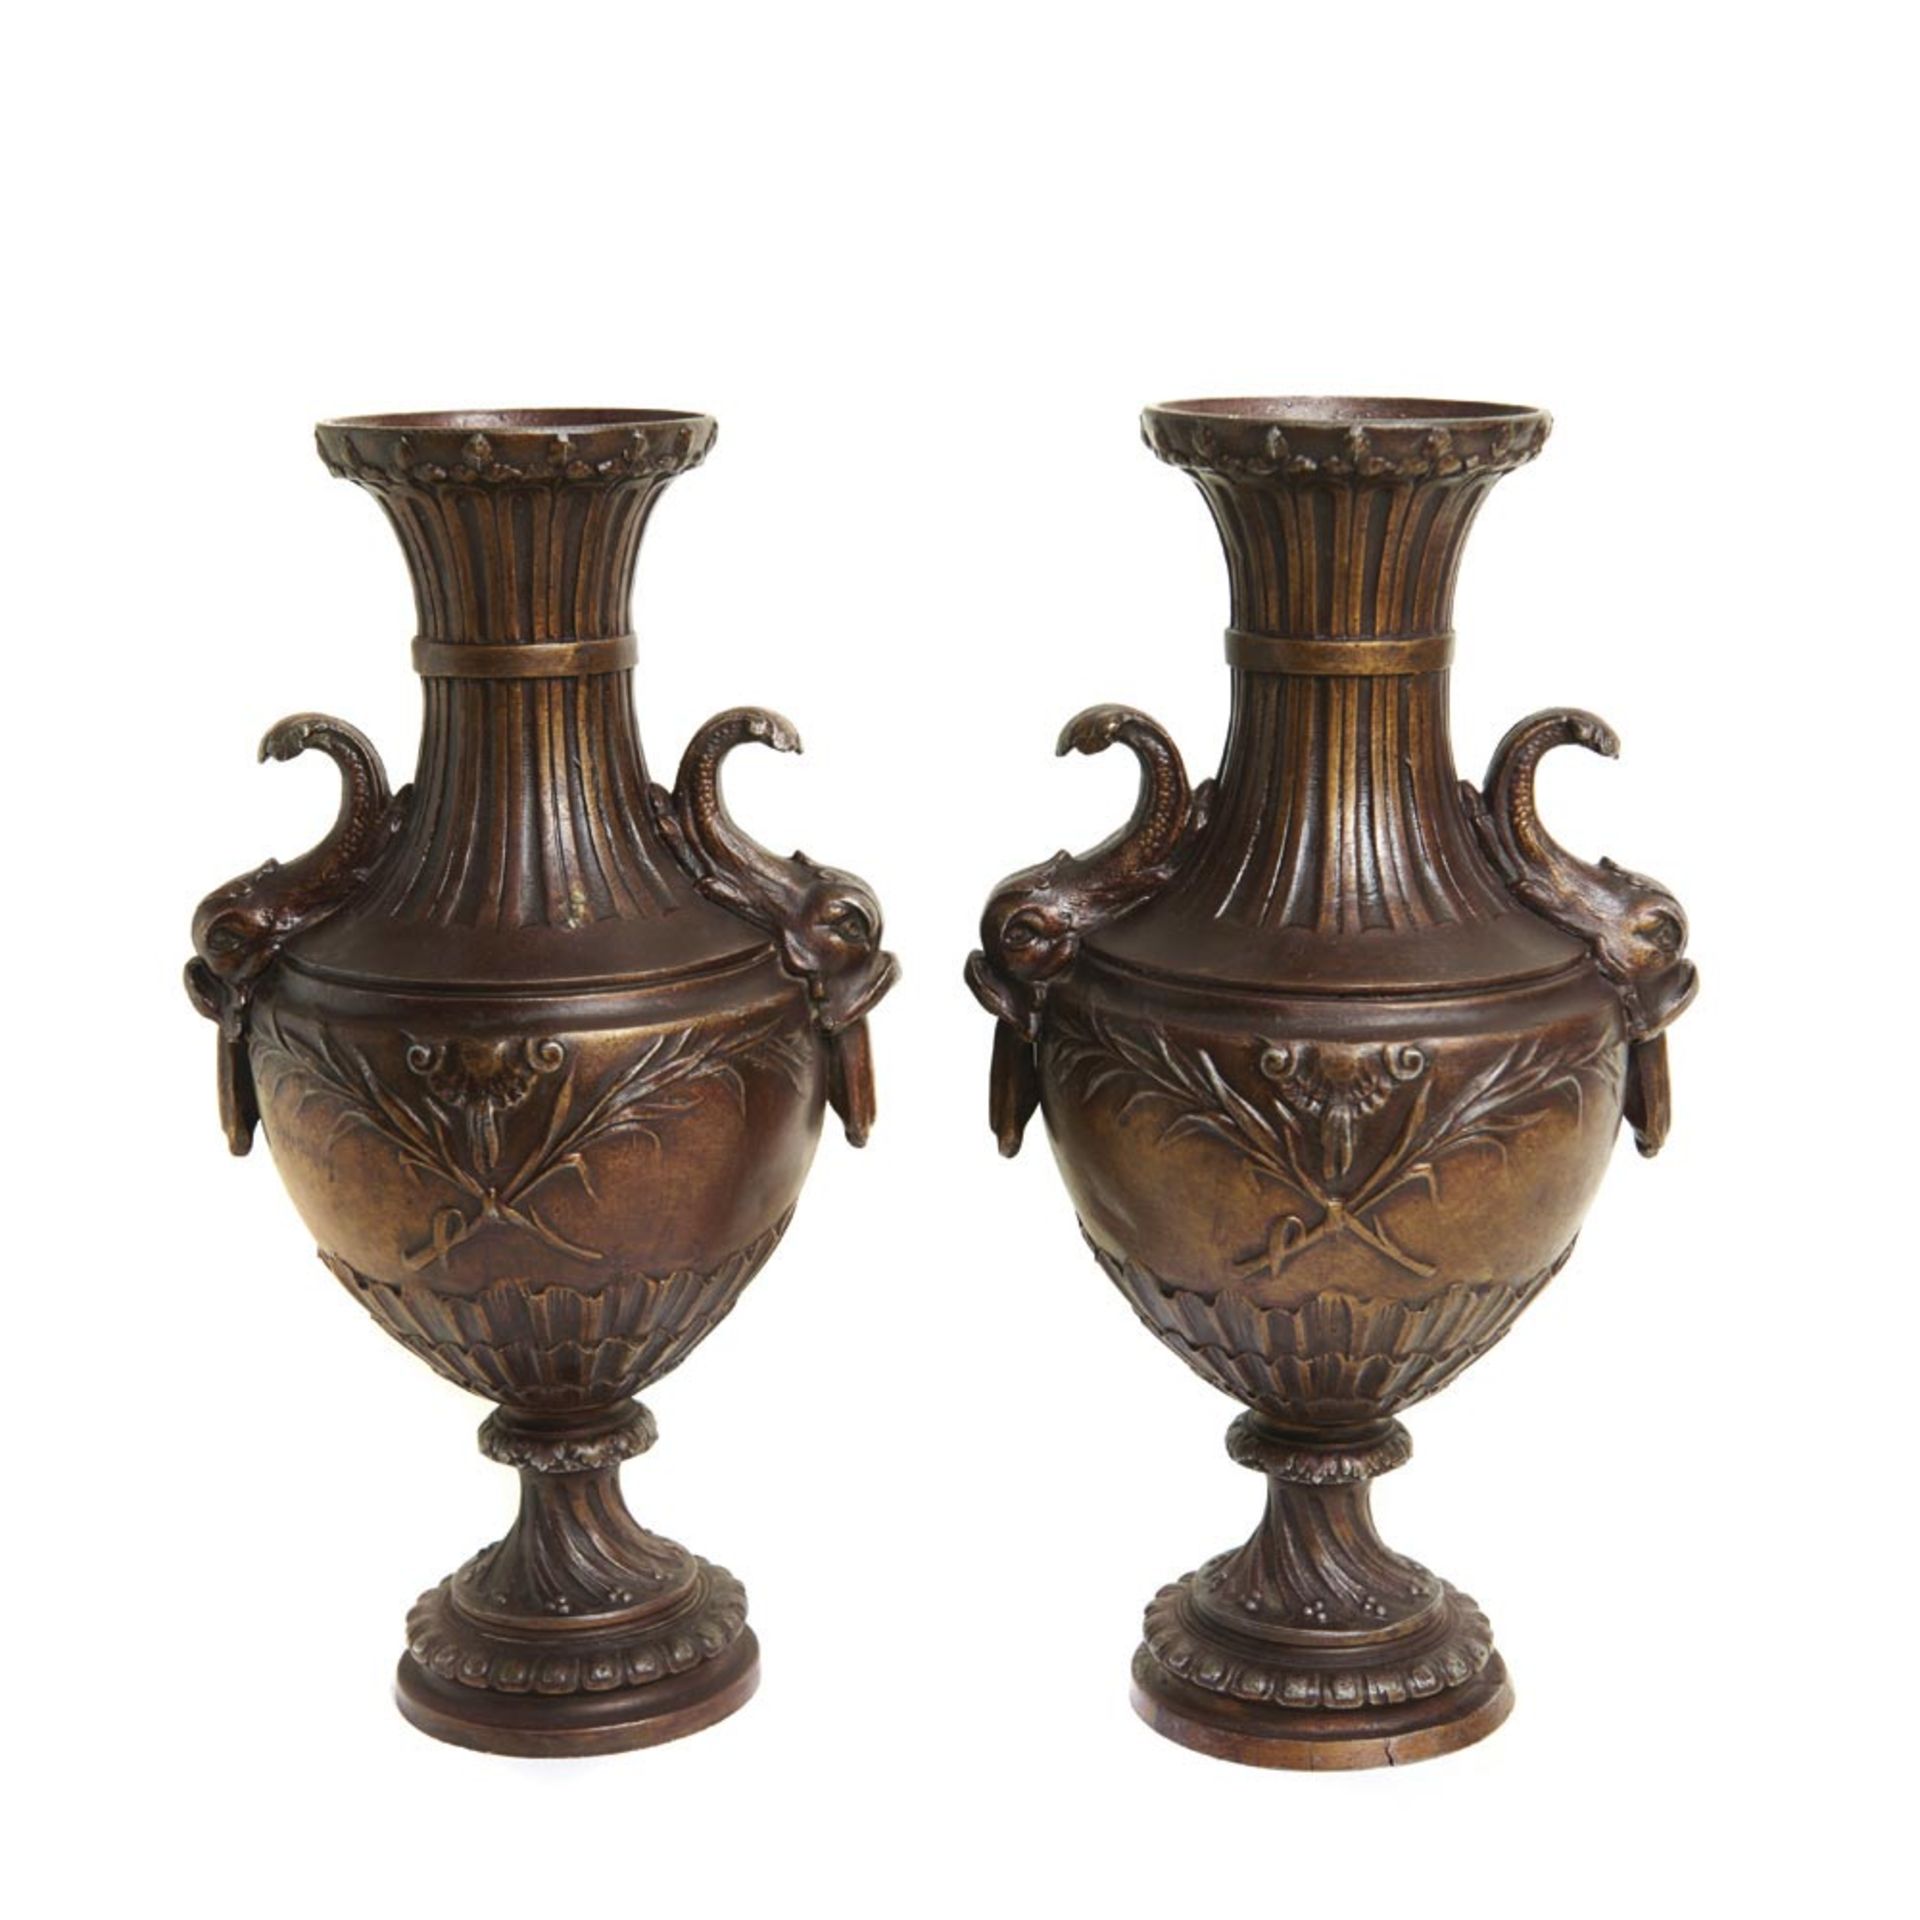 French Louis XVI style tin pair vases. Pareja de jarrones franceses estilo Luis XVI en estaño